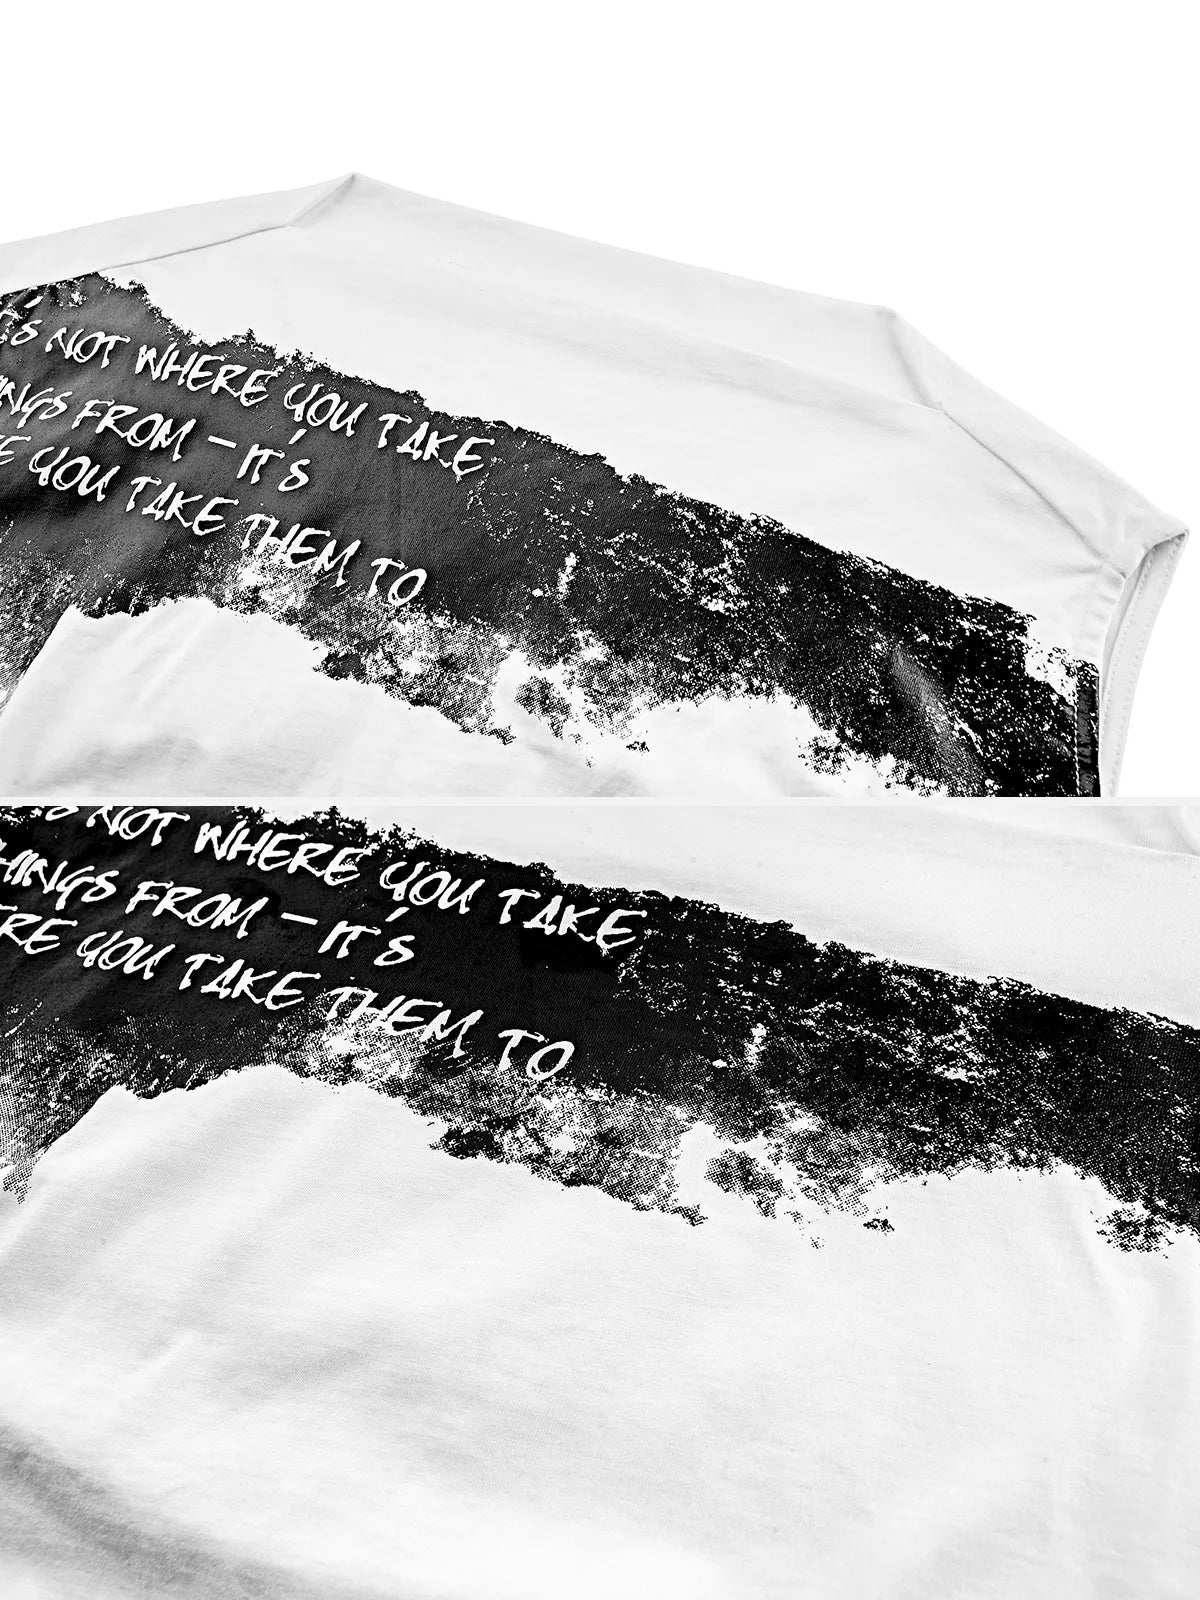 Artistic Print Sleeveless T-Shirt